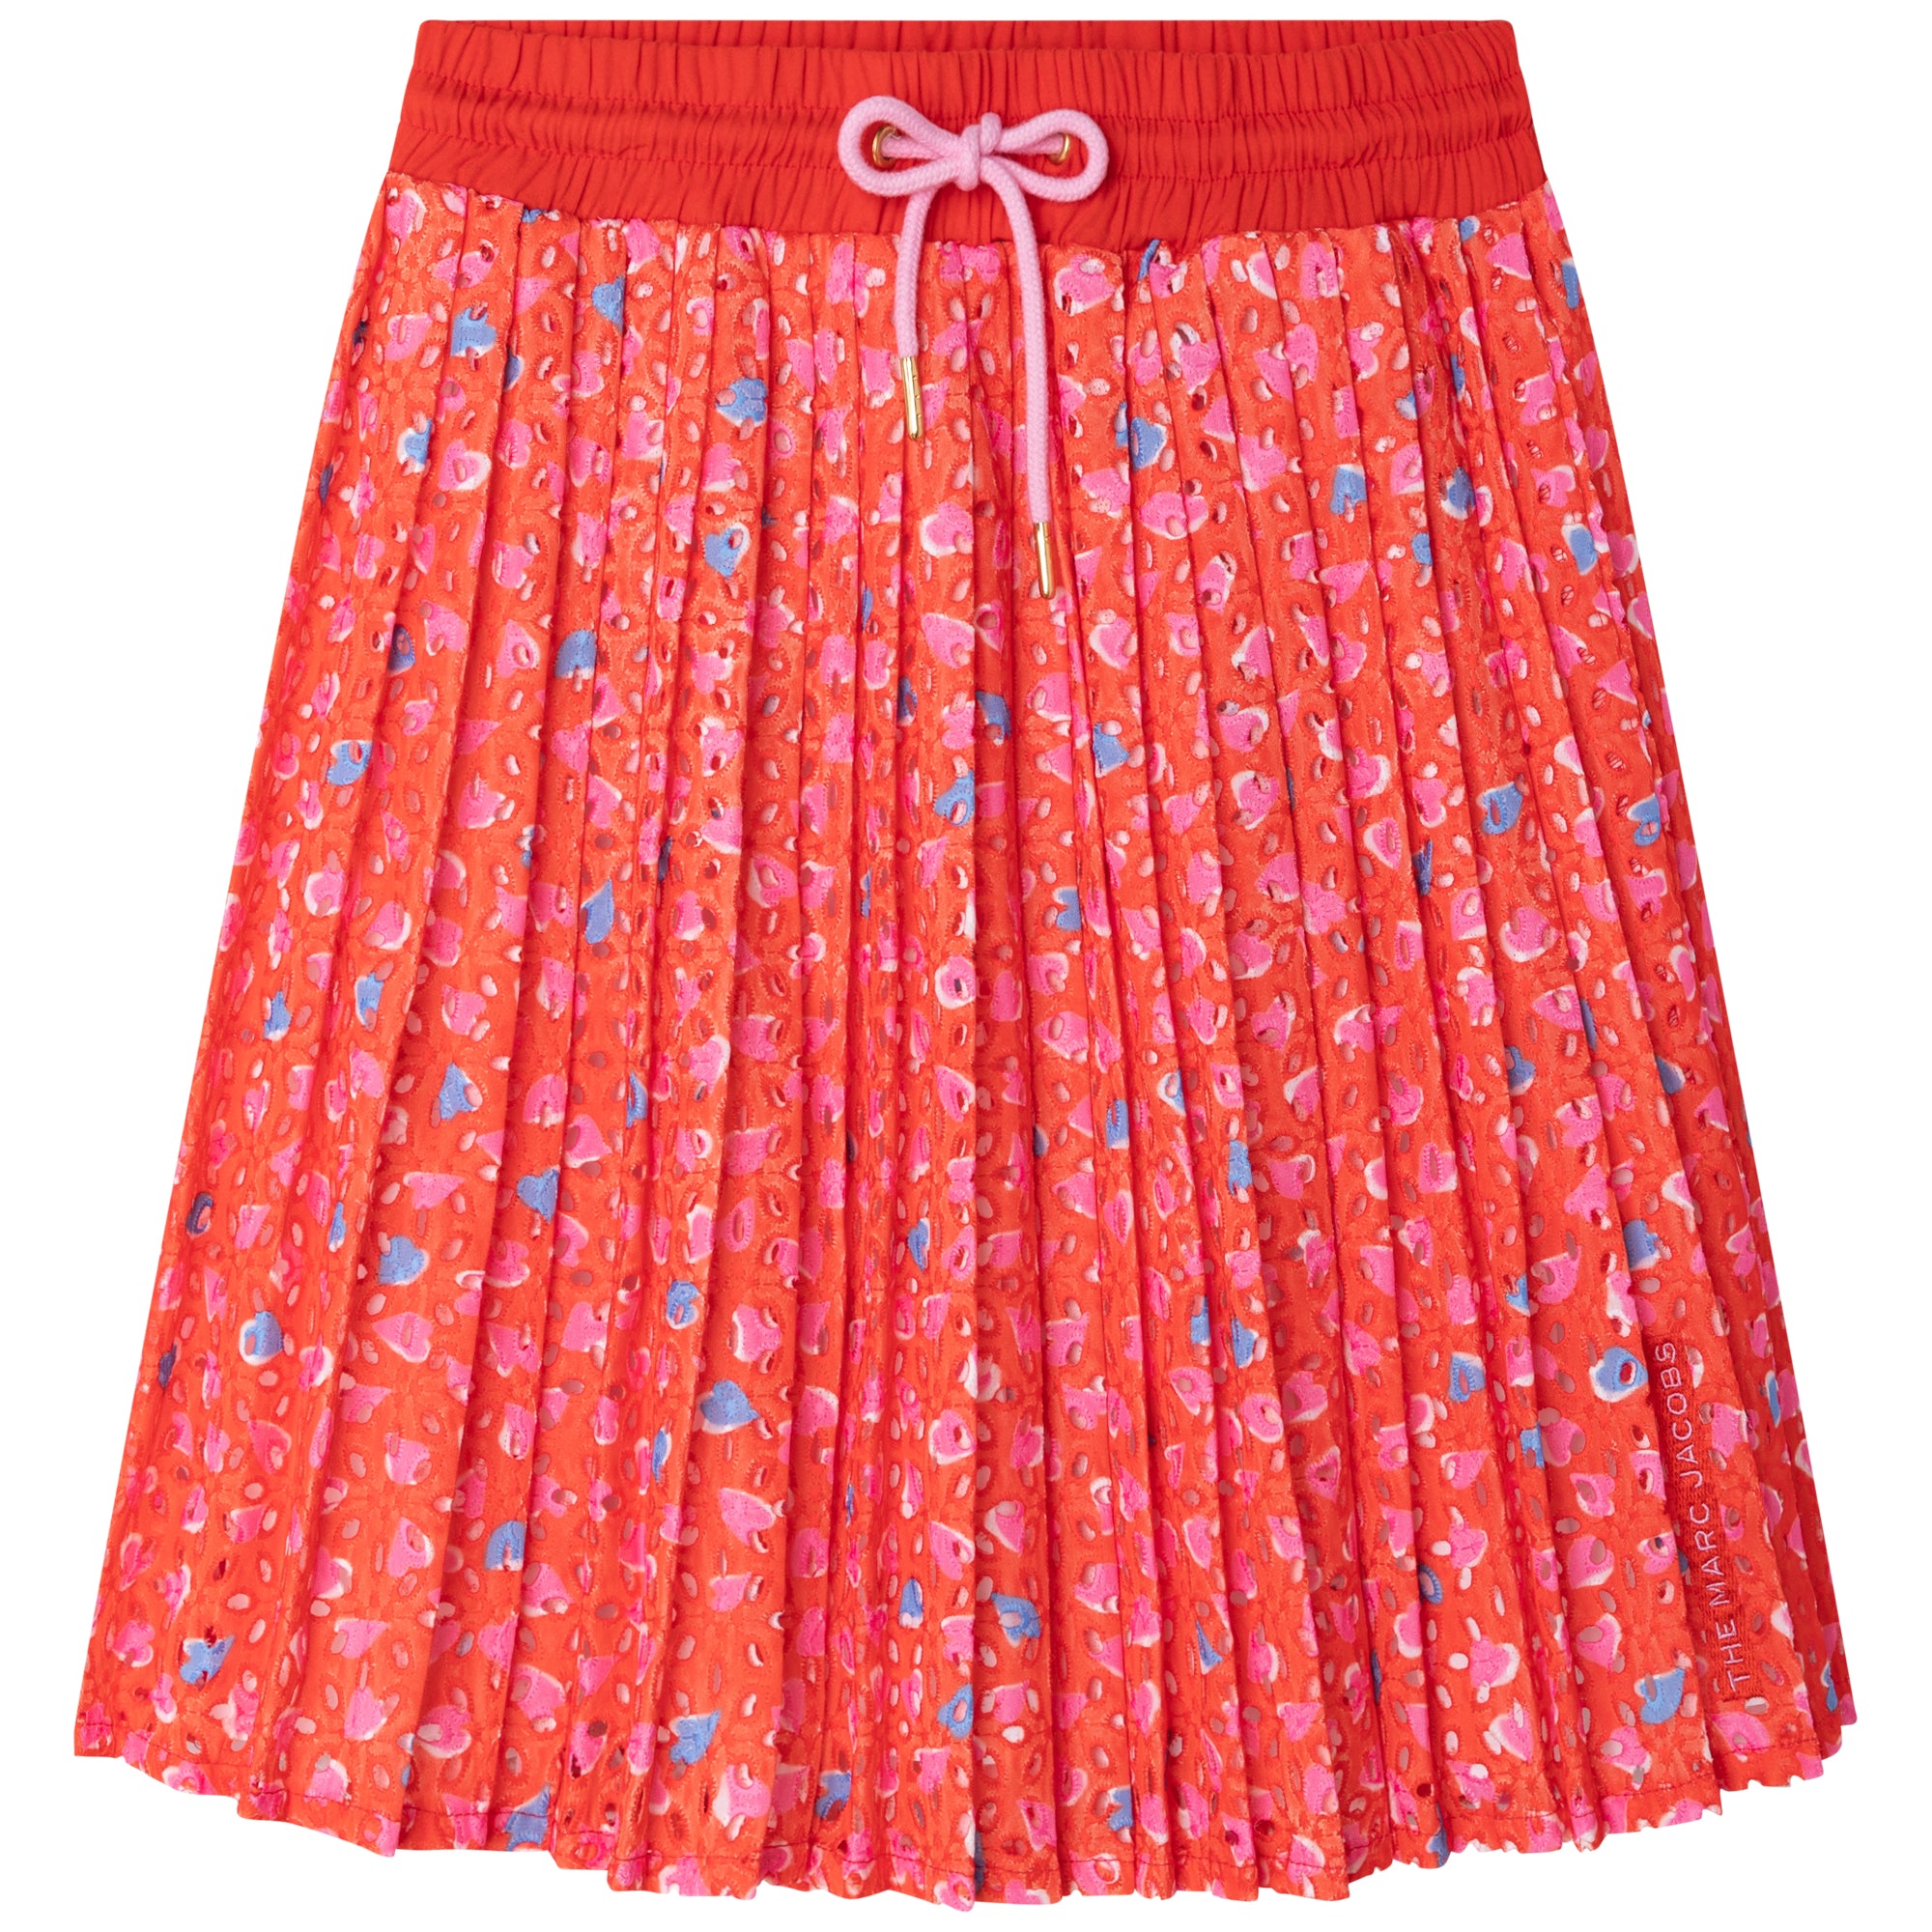 Jacob Pleated Skirt Style: W13123